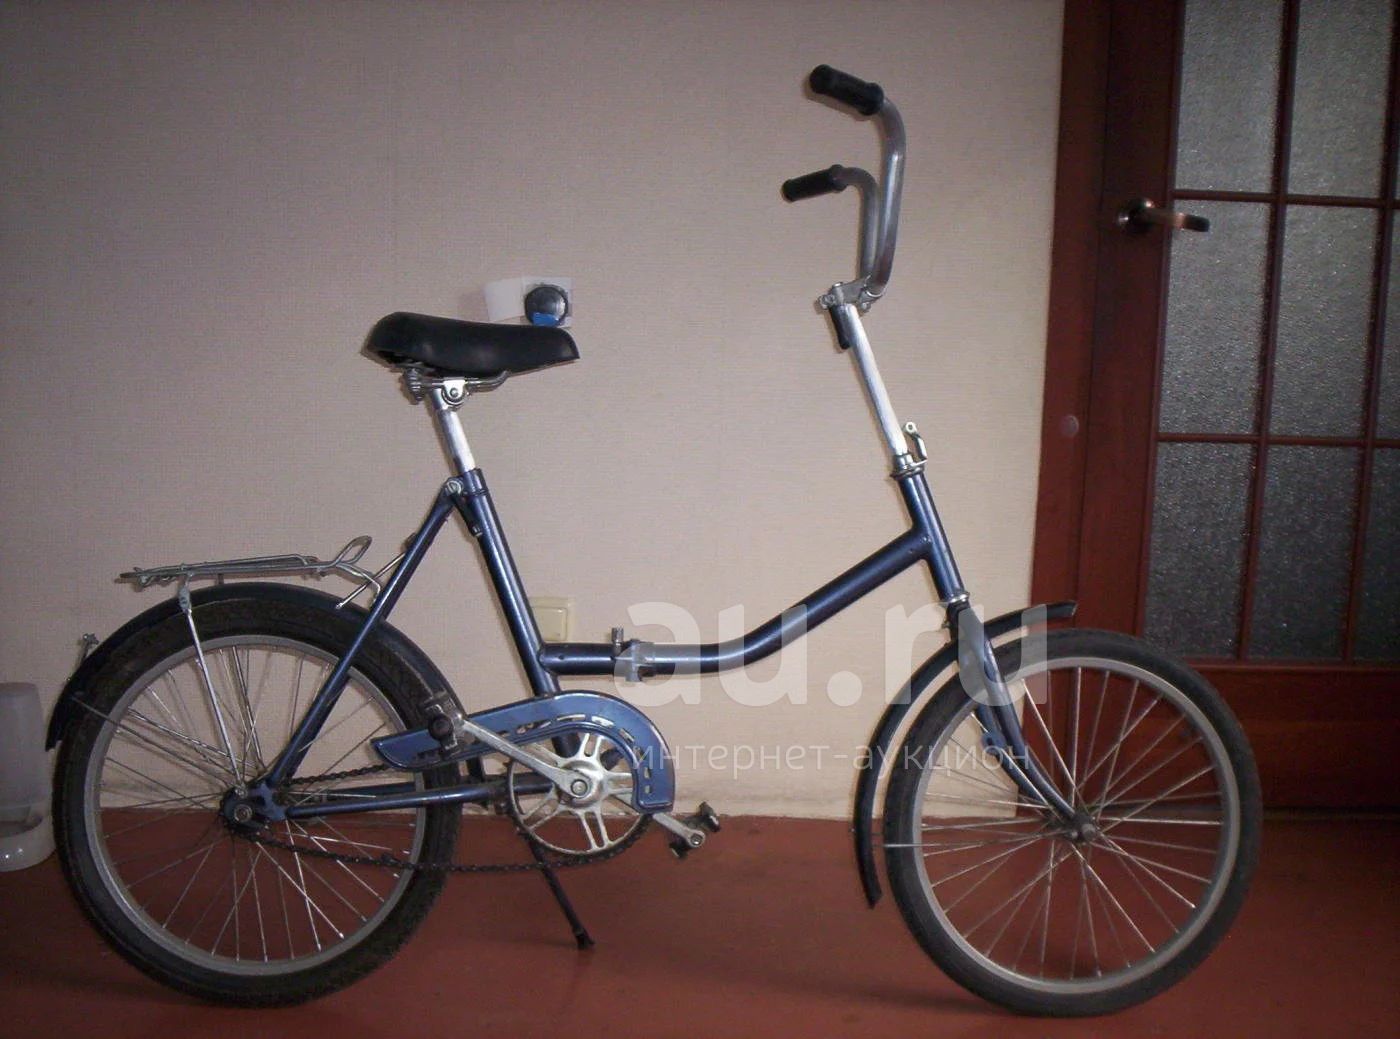 Велосипед кама диаметр колеса. Советский велосипед Кама. Велта Кама велосипед. Велосипед Кама диаметр колеса 20 дюймов. Велосипед Велта Кама 2000.